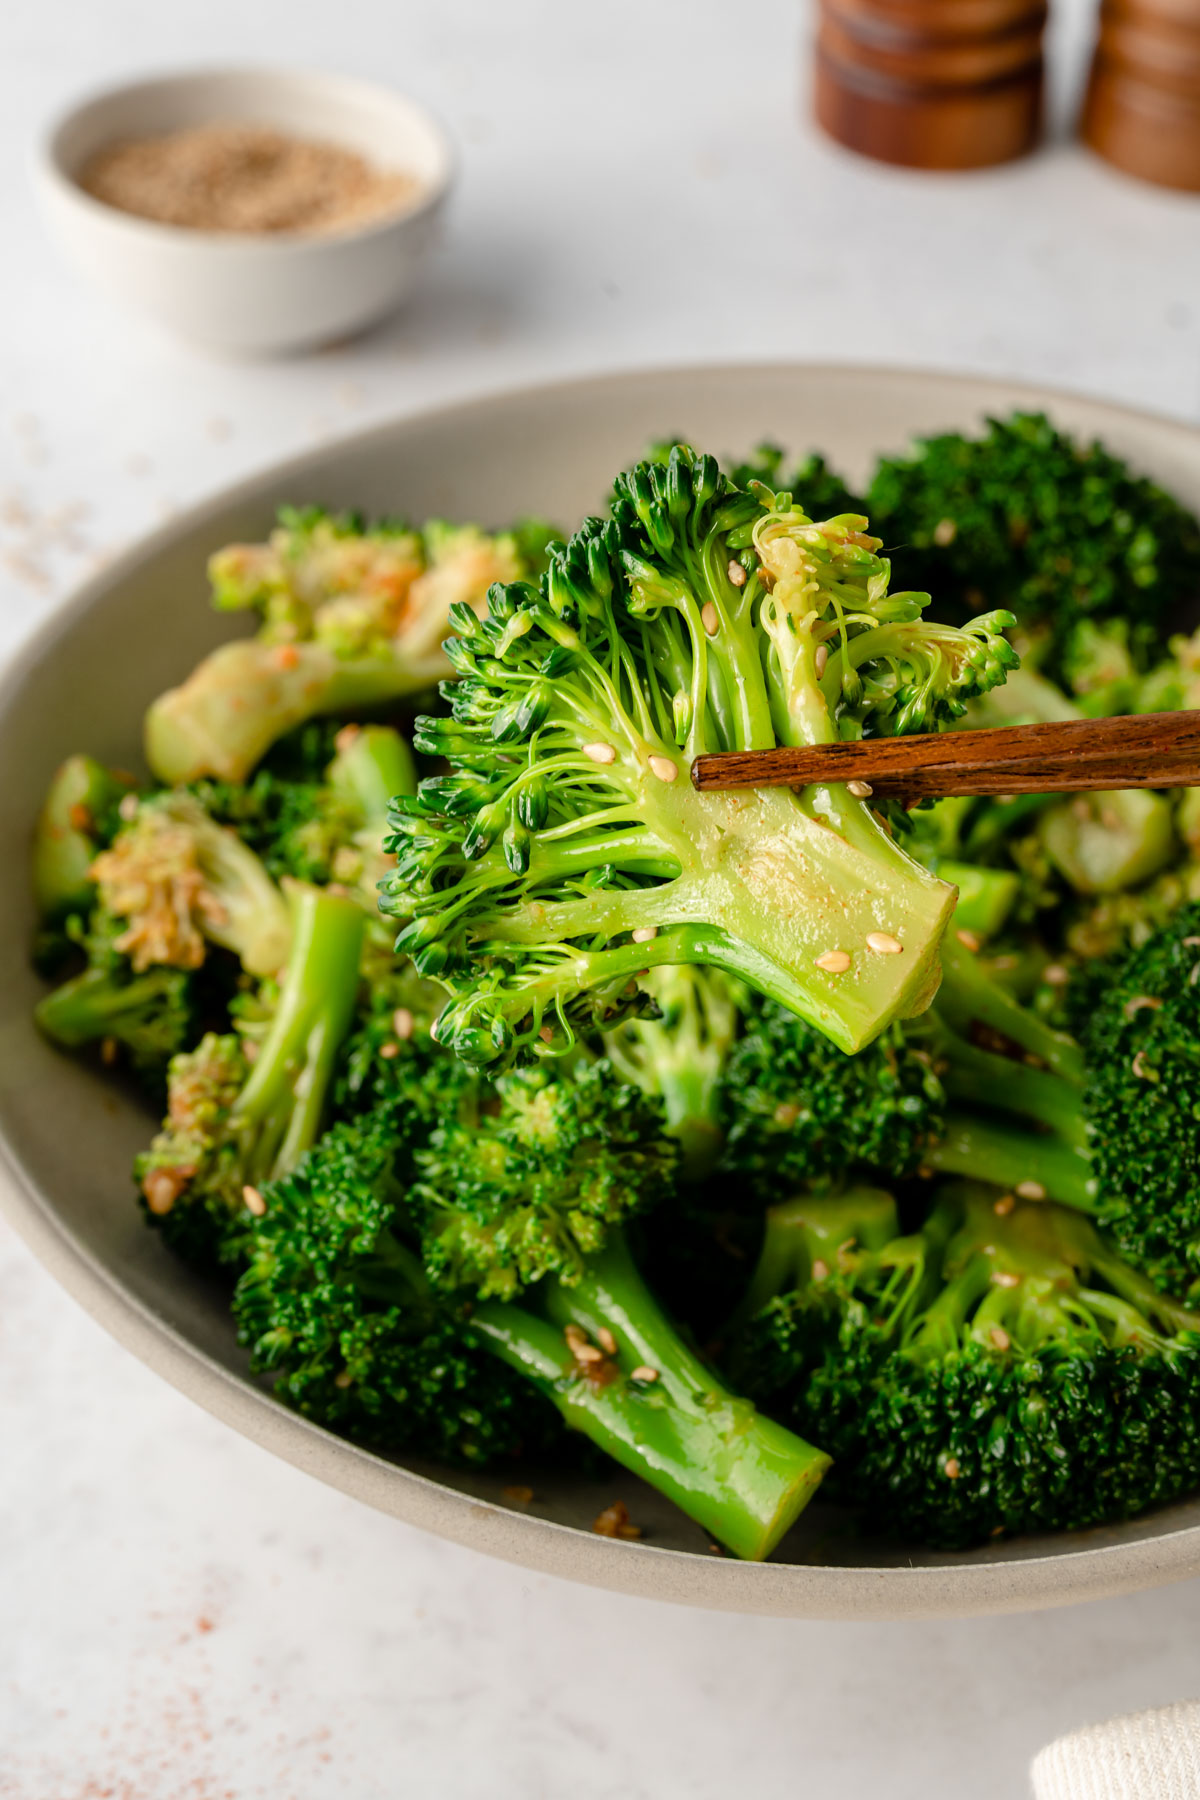 Wooden chopsticks holding a marinaded broccoli over a bowl of Korean Broccoli Salad.